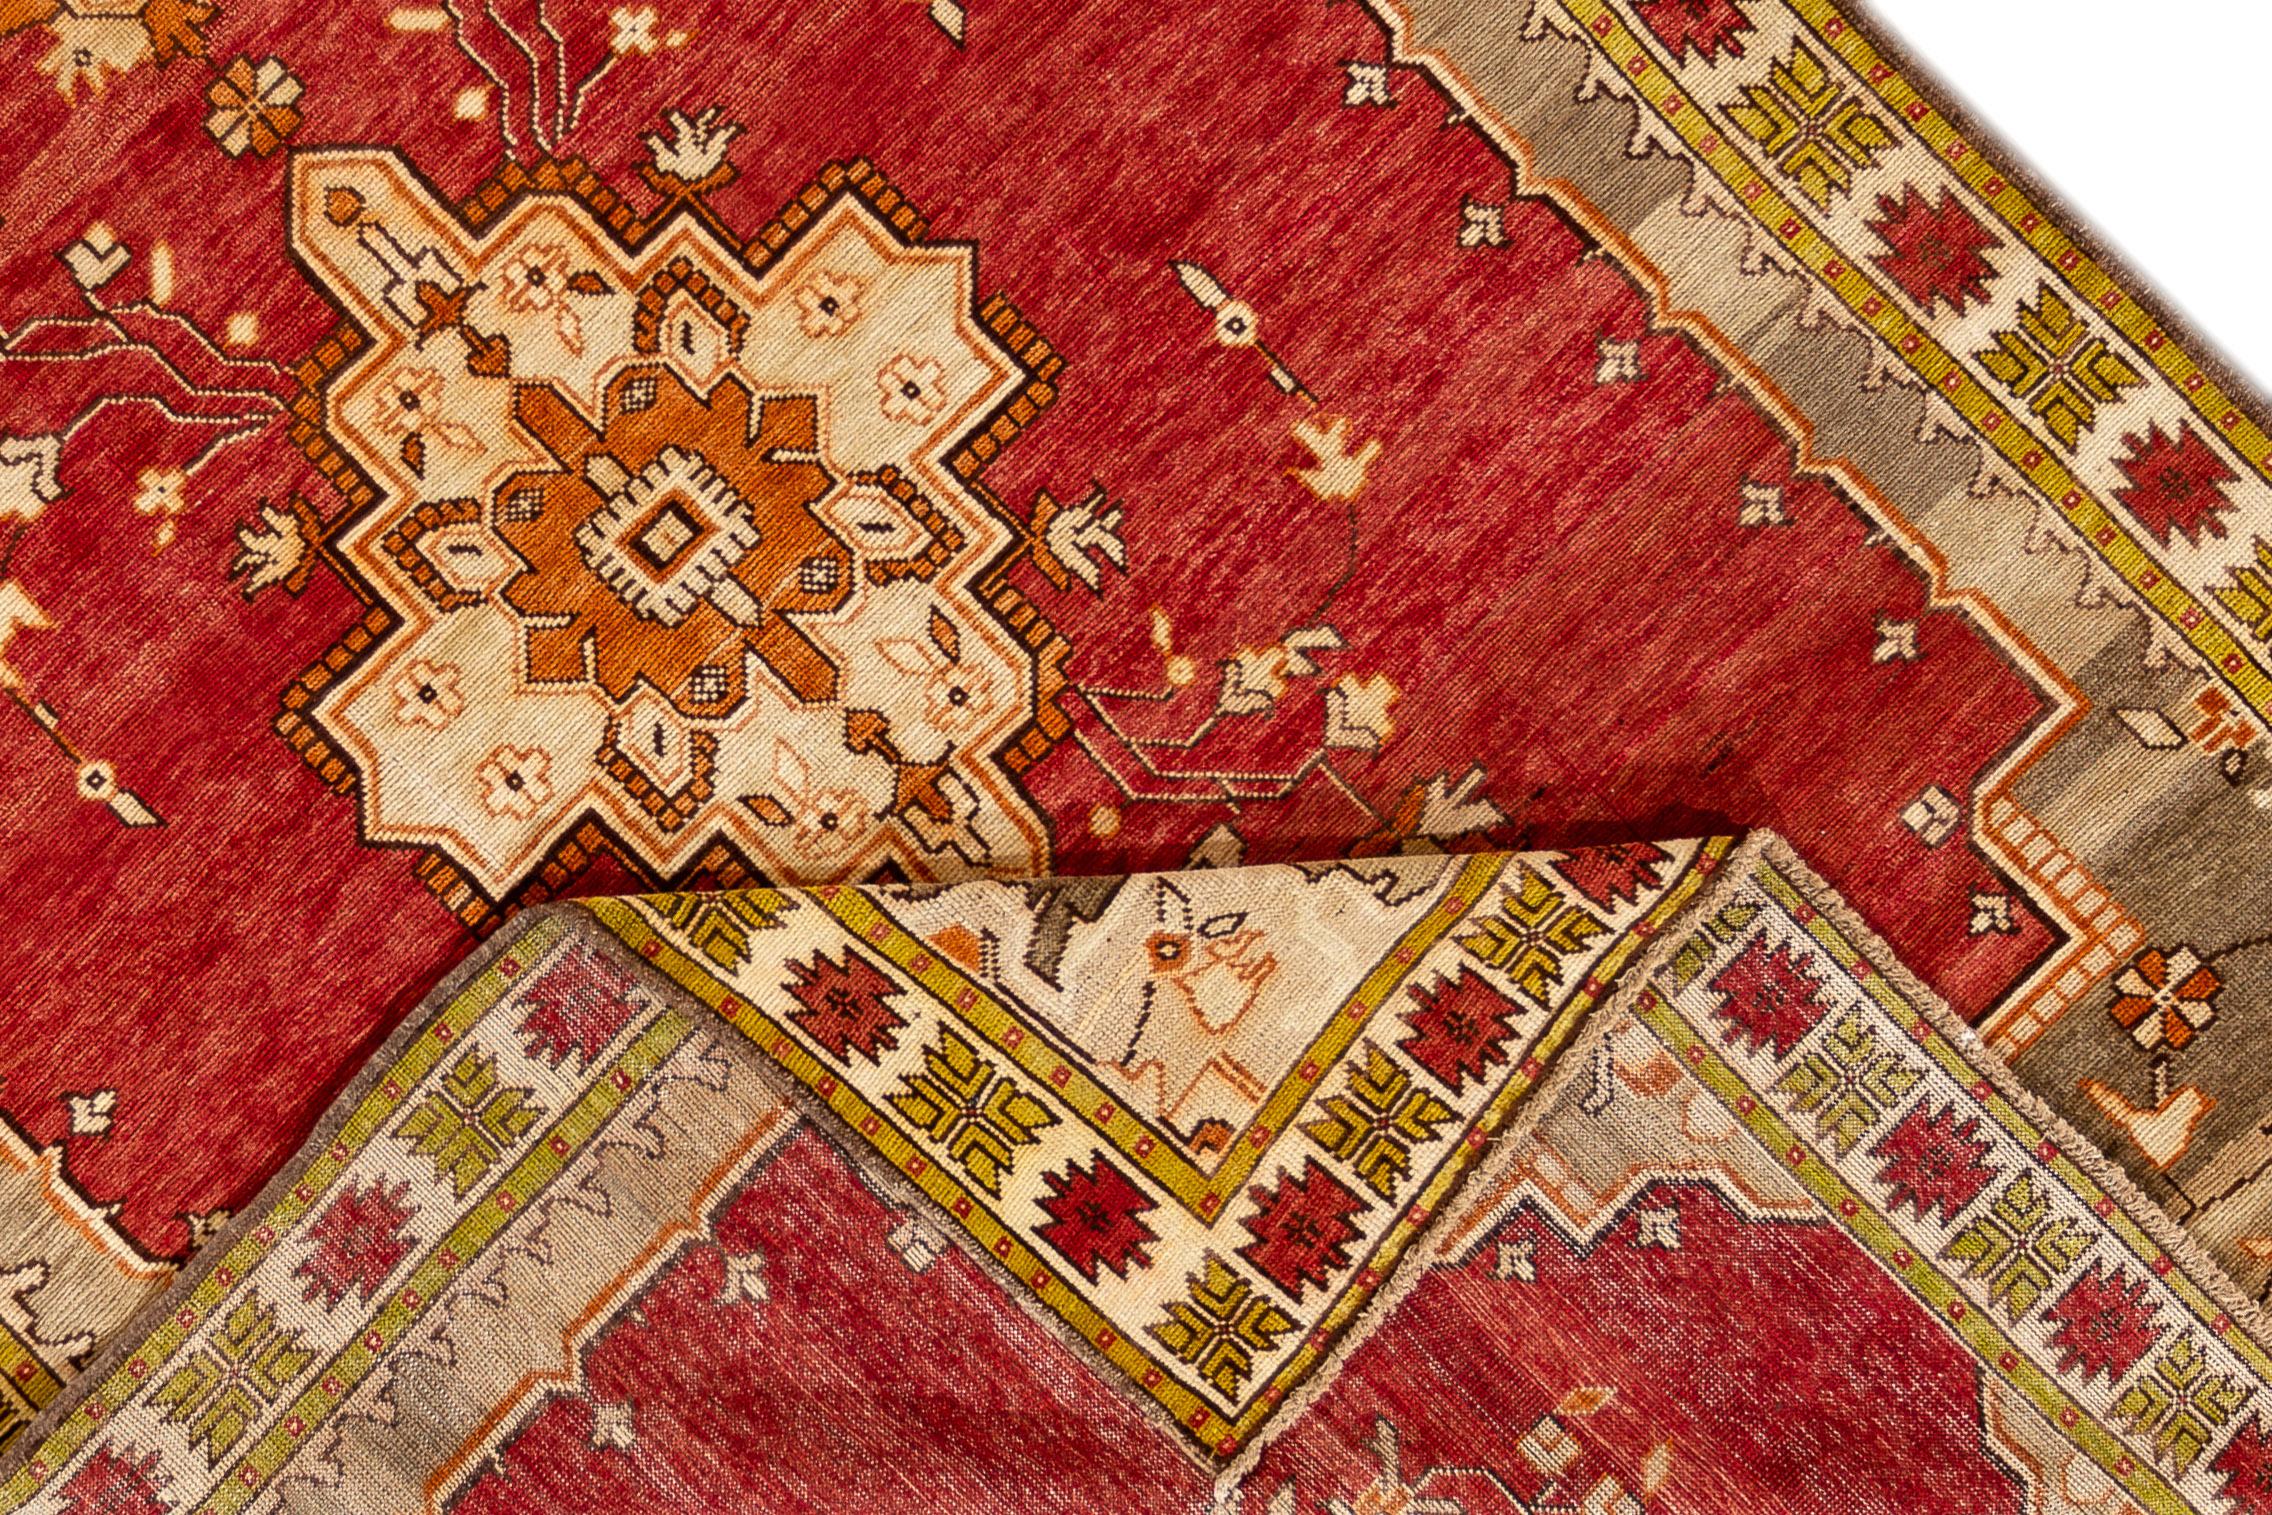 Vintage 1930s Khotan rug with a medallion design on a red field. Measures 6'5